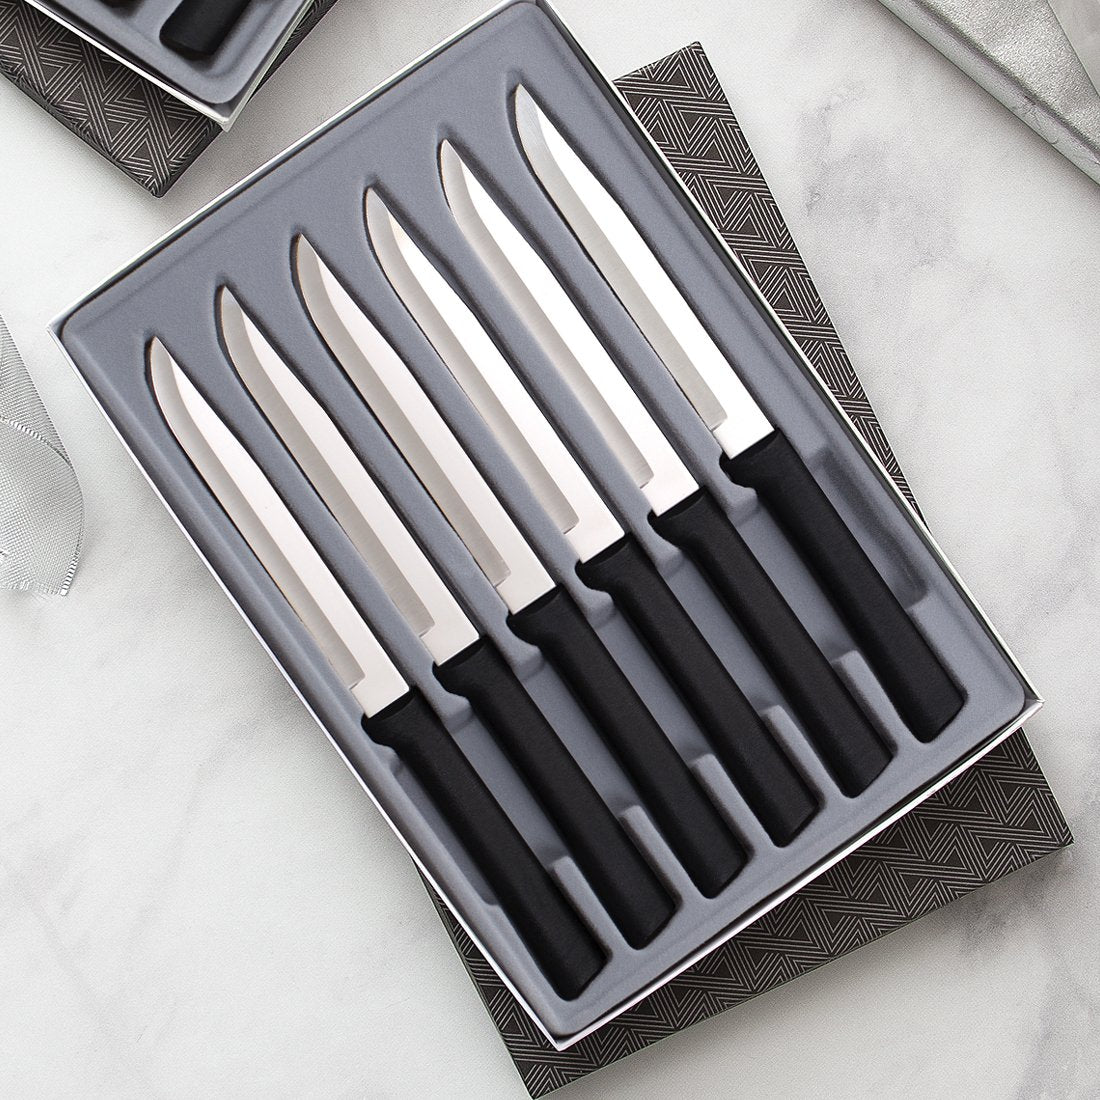 Essential Oak Block Set  Safe Storage Knife Set - Rada Cutlery